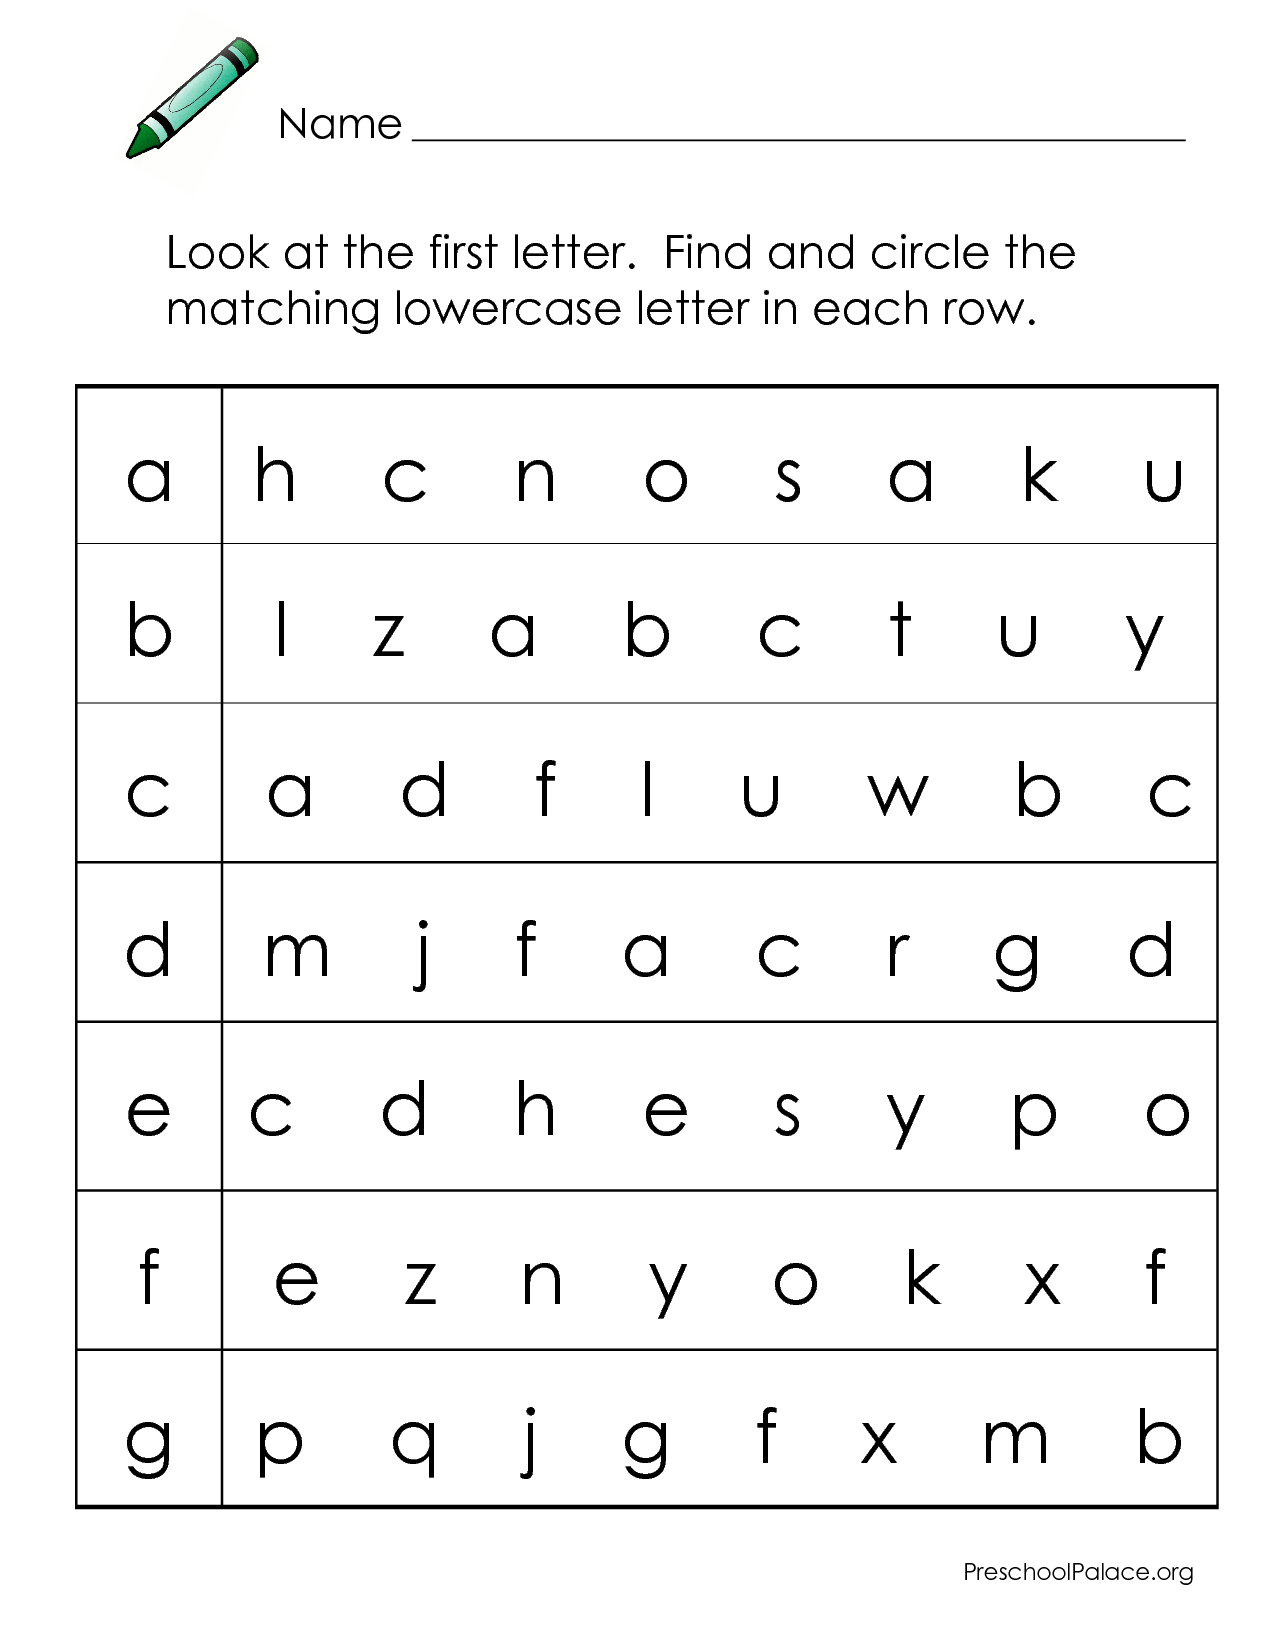 Alphabet Worksheets For Preschoolers | Abcs - Letter regarding Alphabet Worksheets For Toddlers